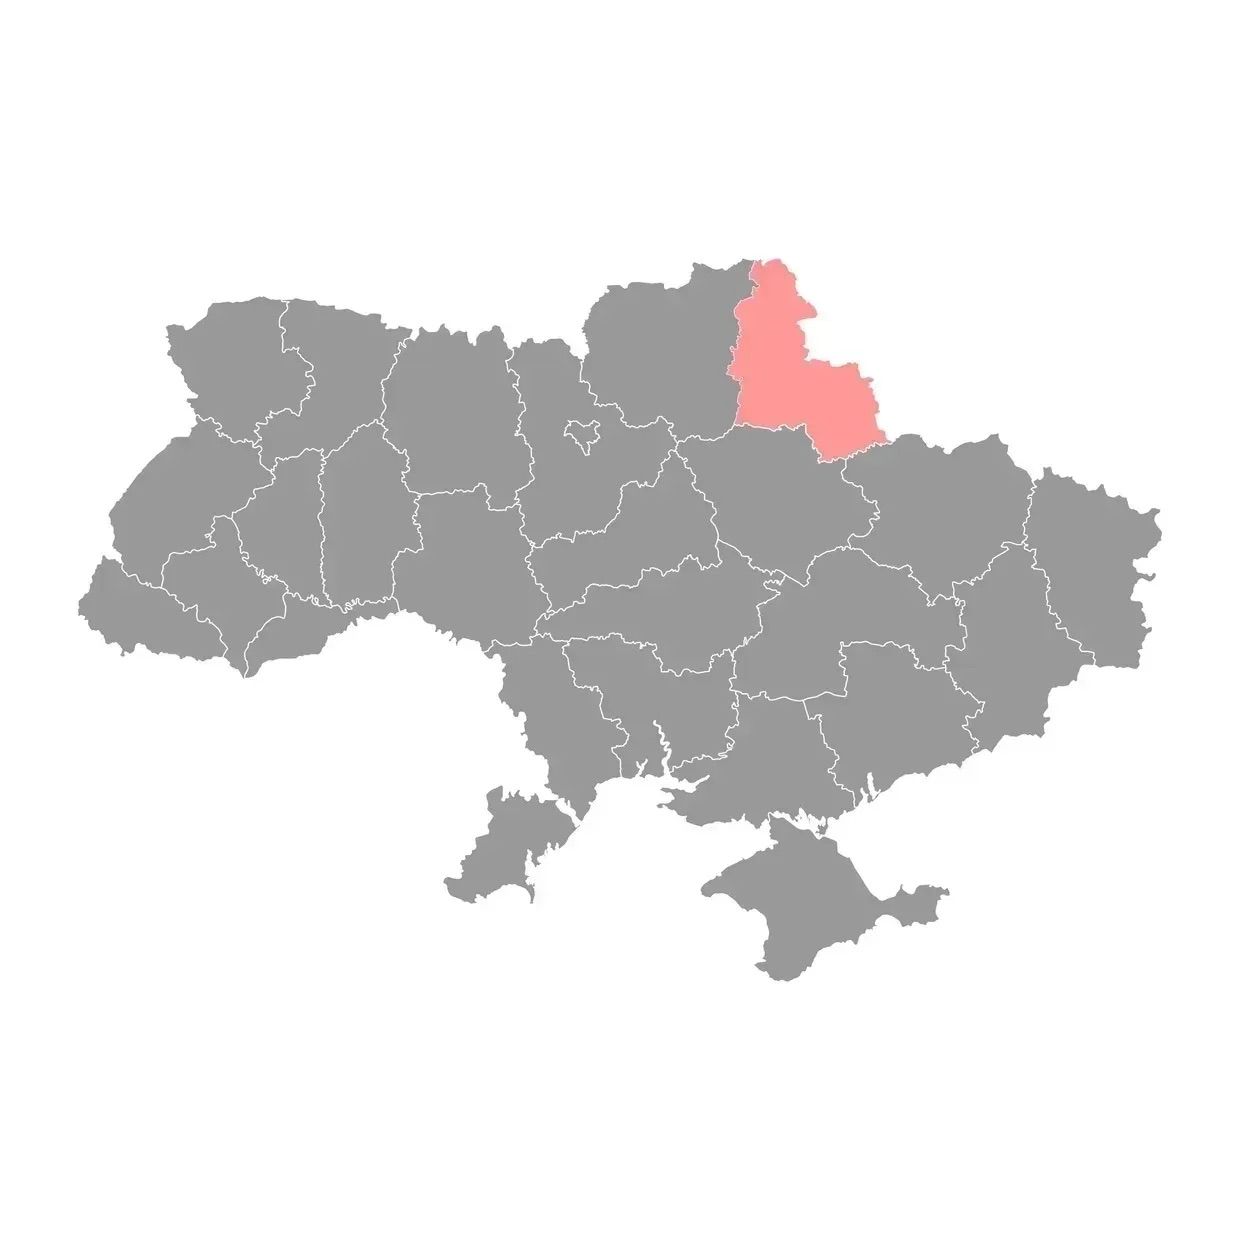 Russia attacks 6 communities in Sumy Oblast